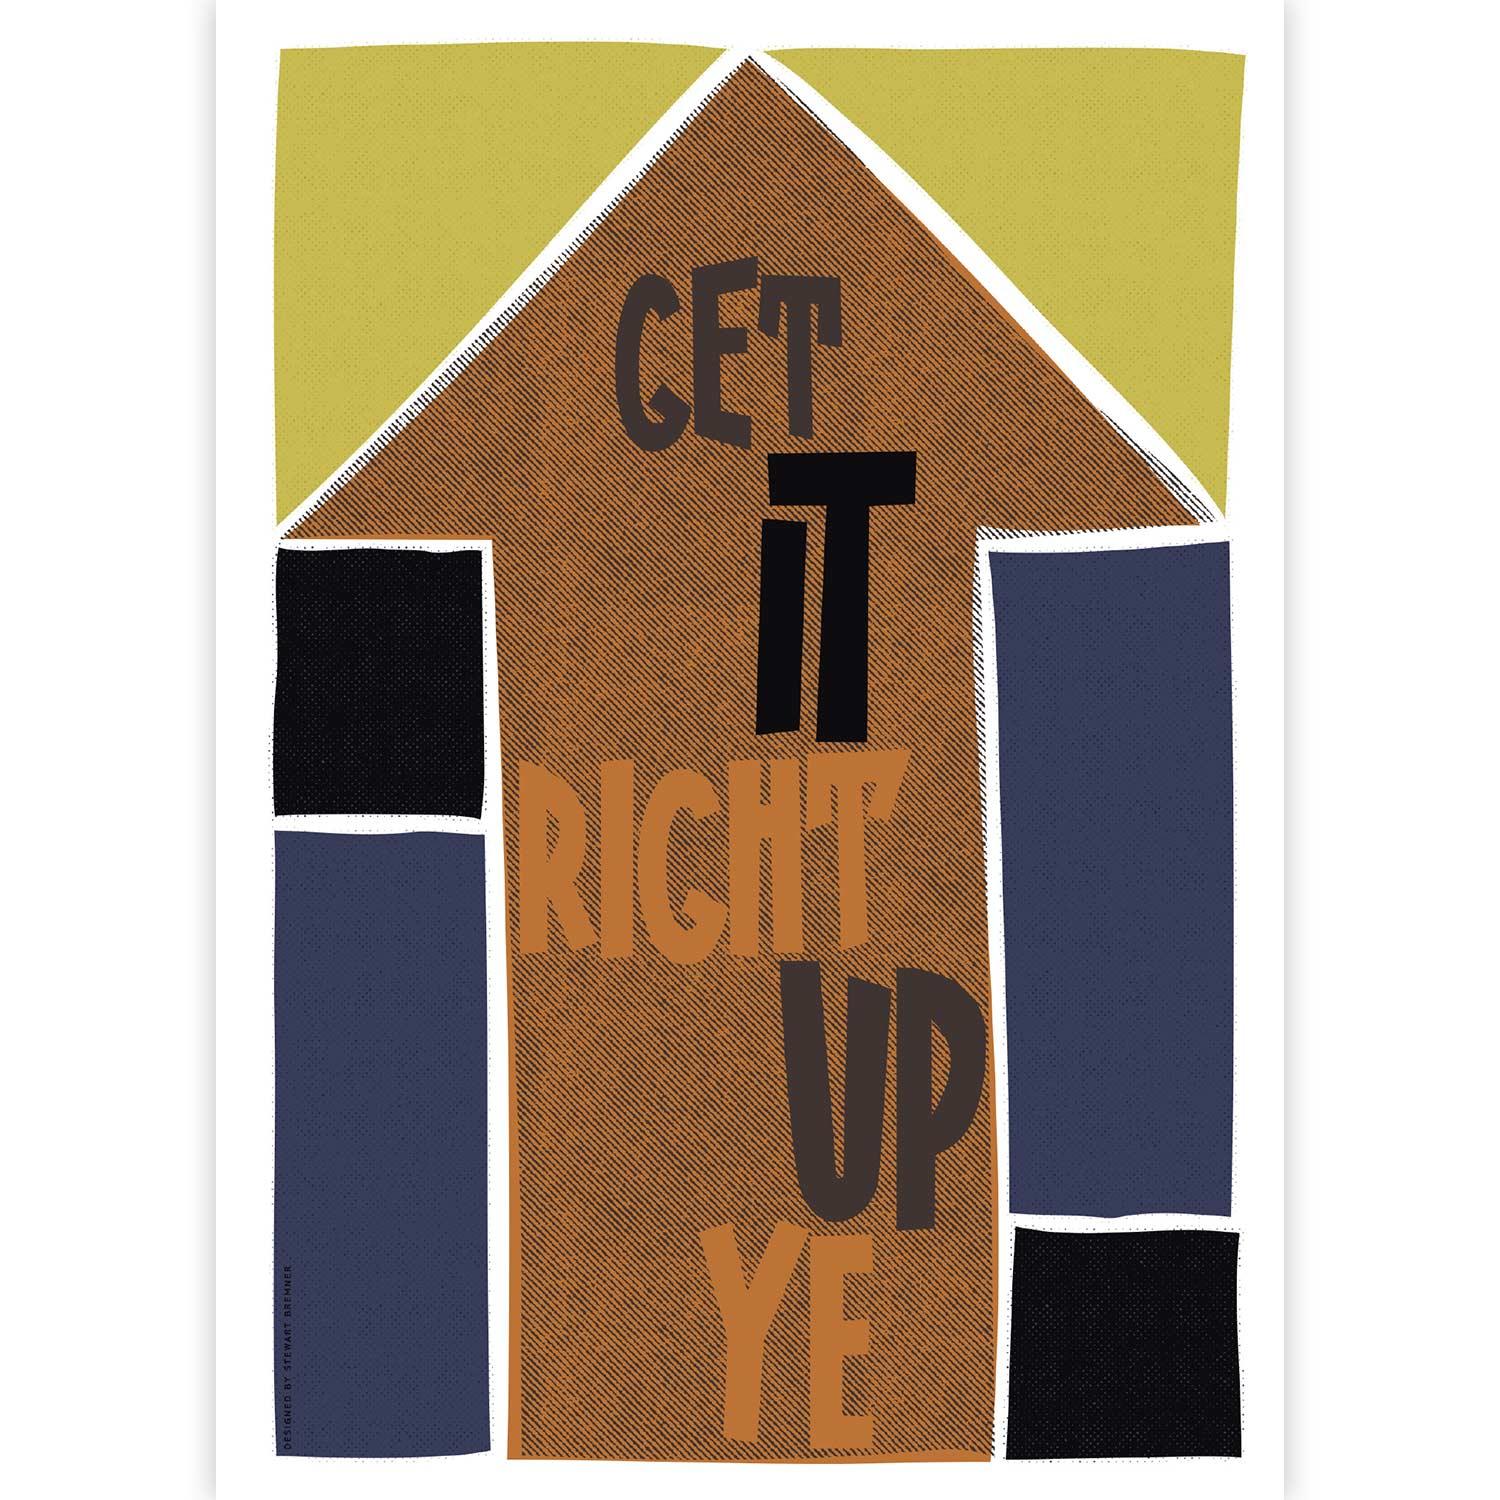 Get it Right Up Ye by Stewart Bremner